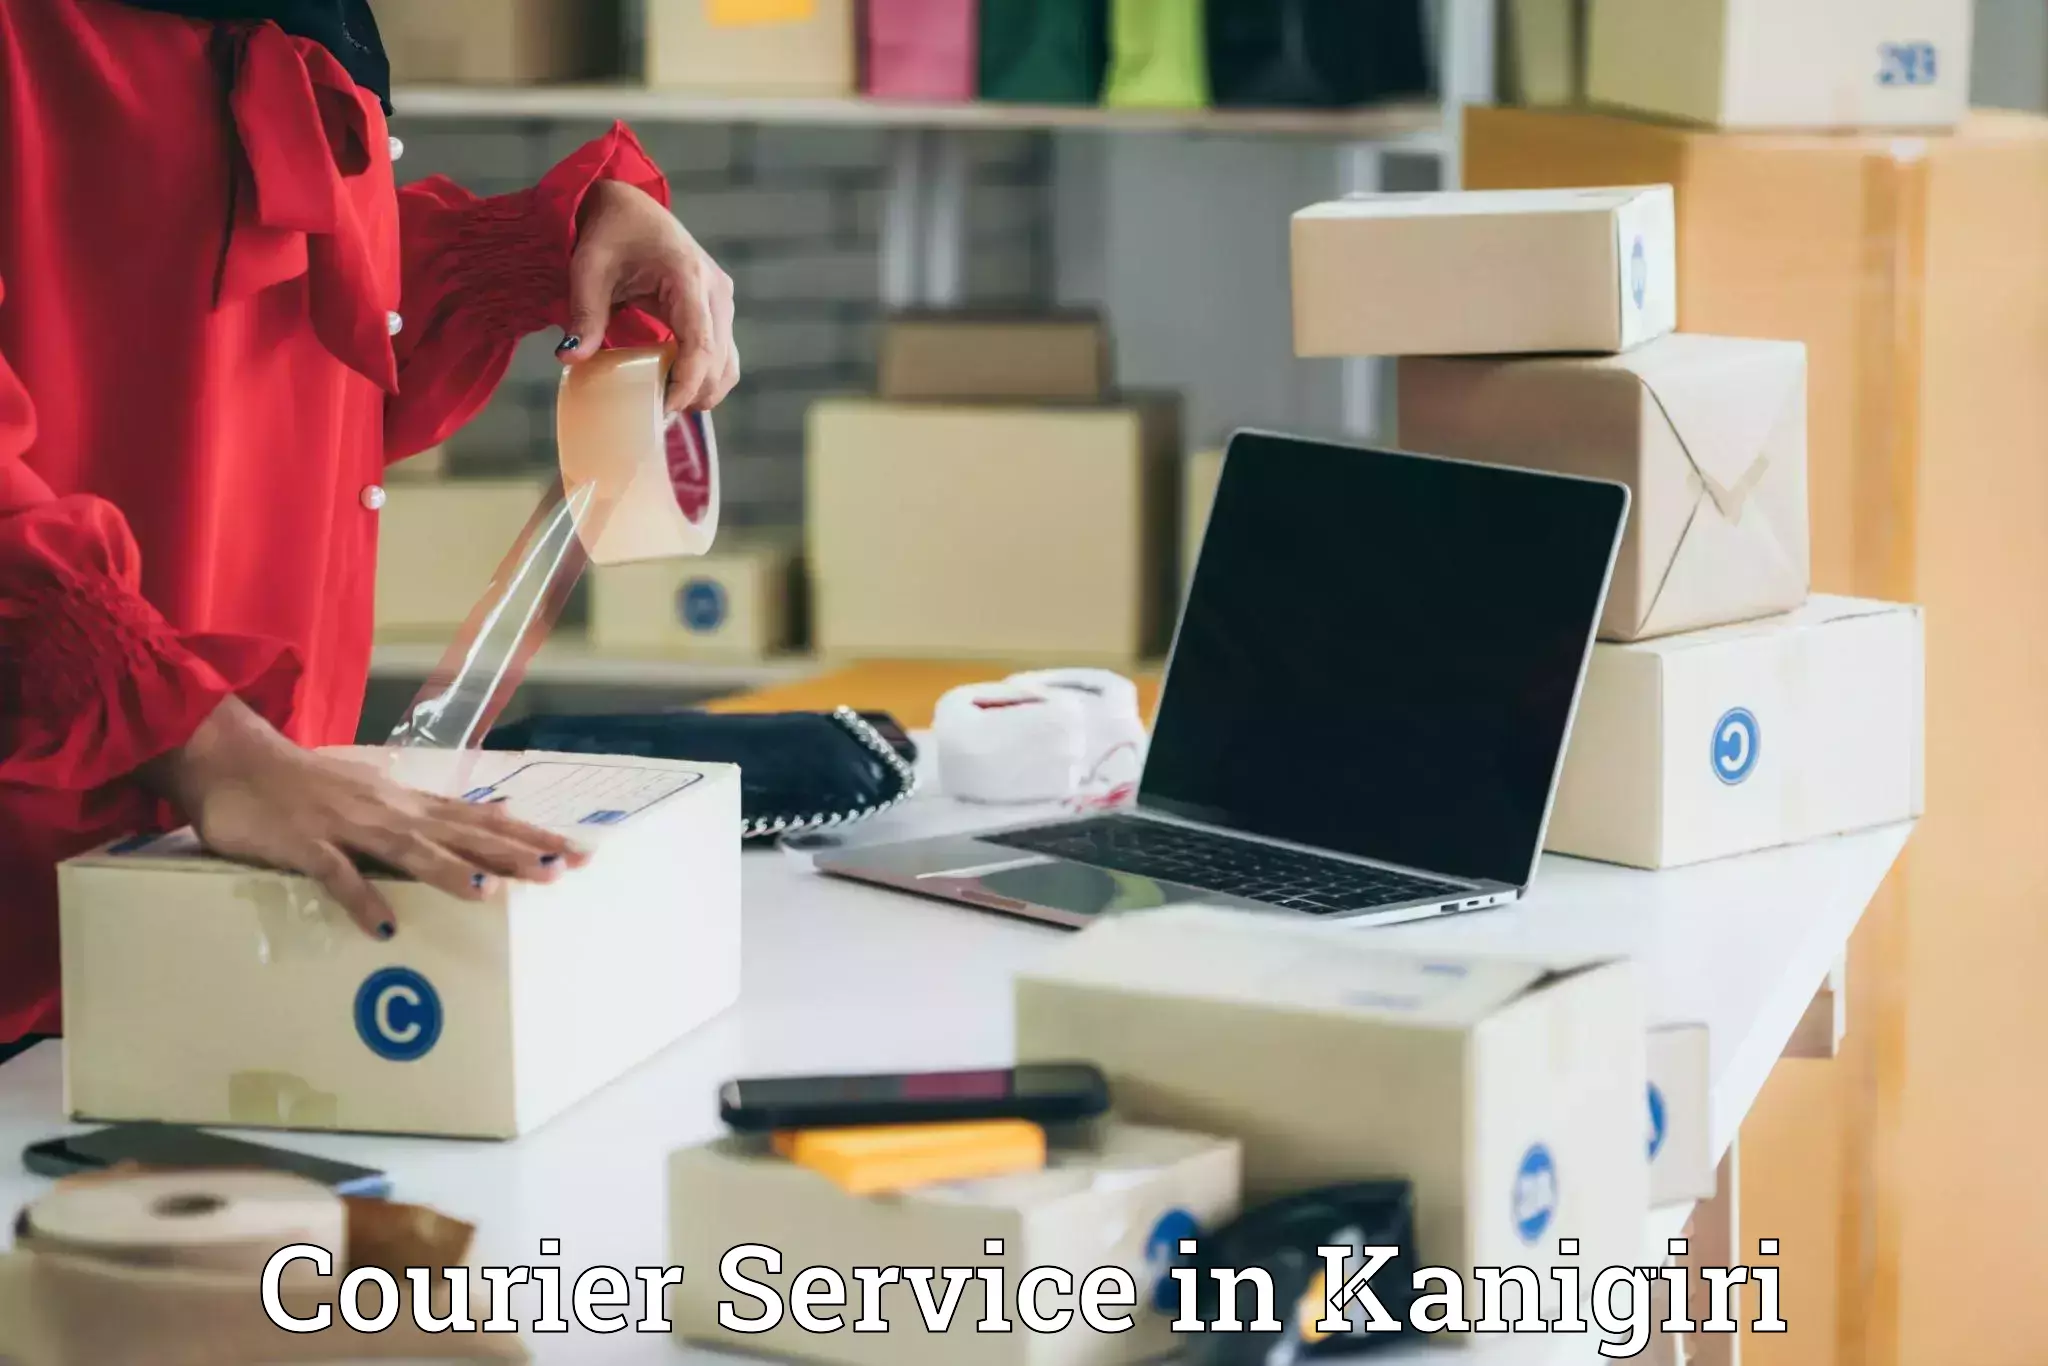 Customer-friendly courier services in Kanigiri